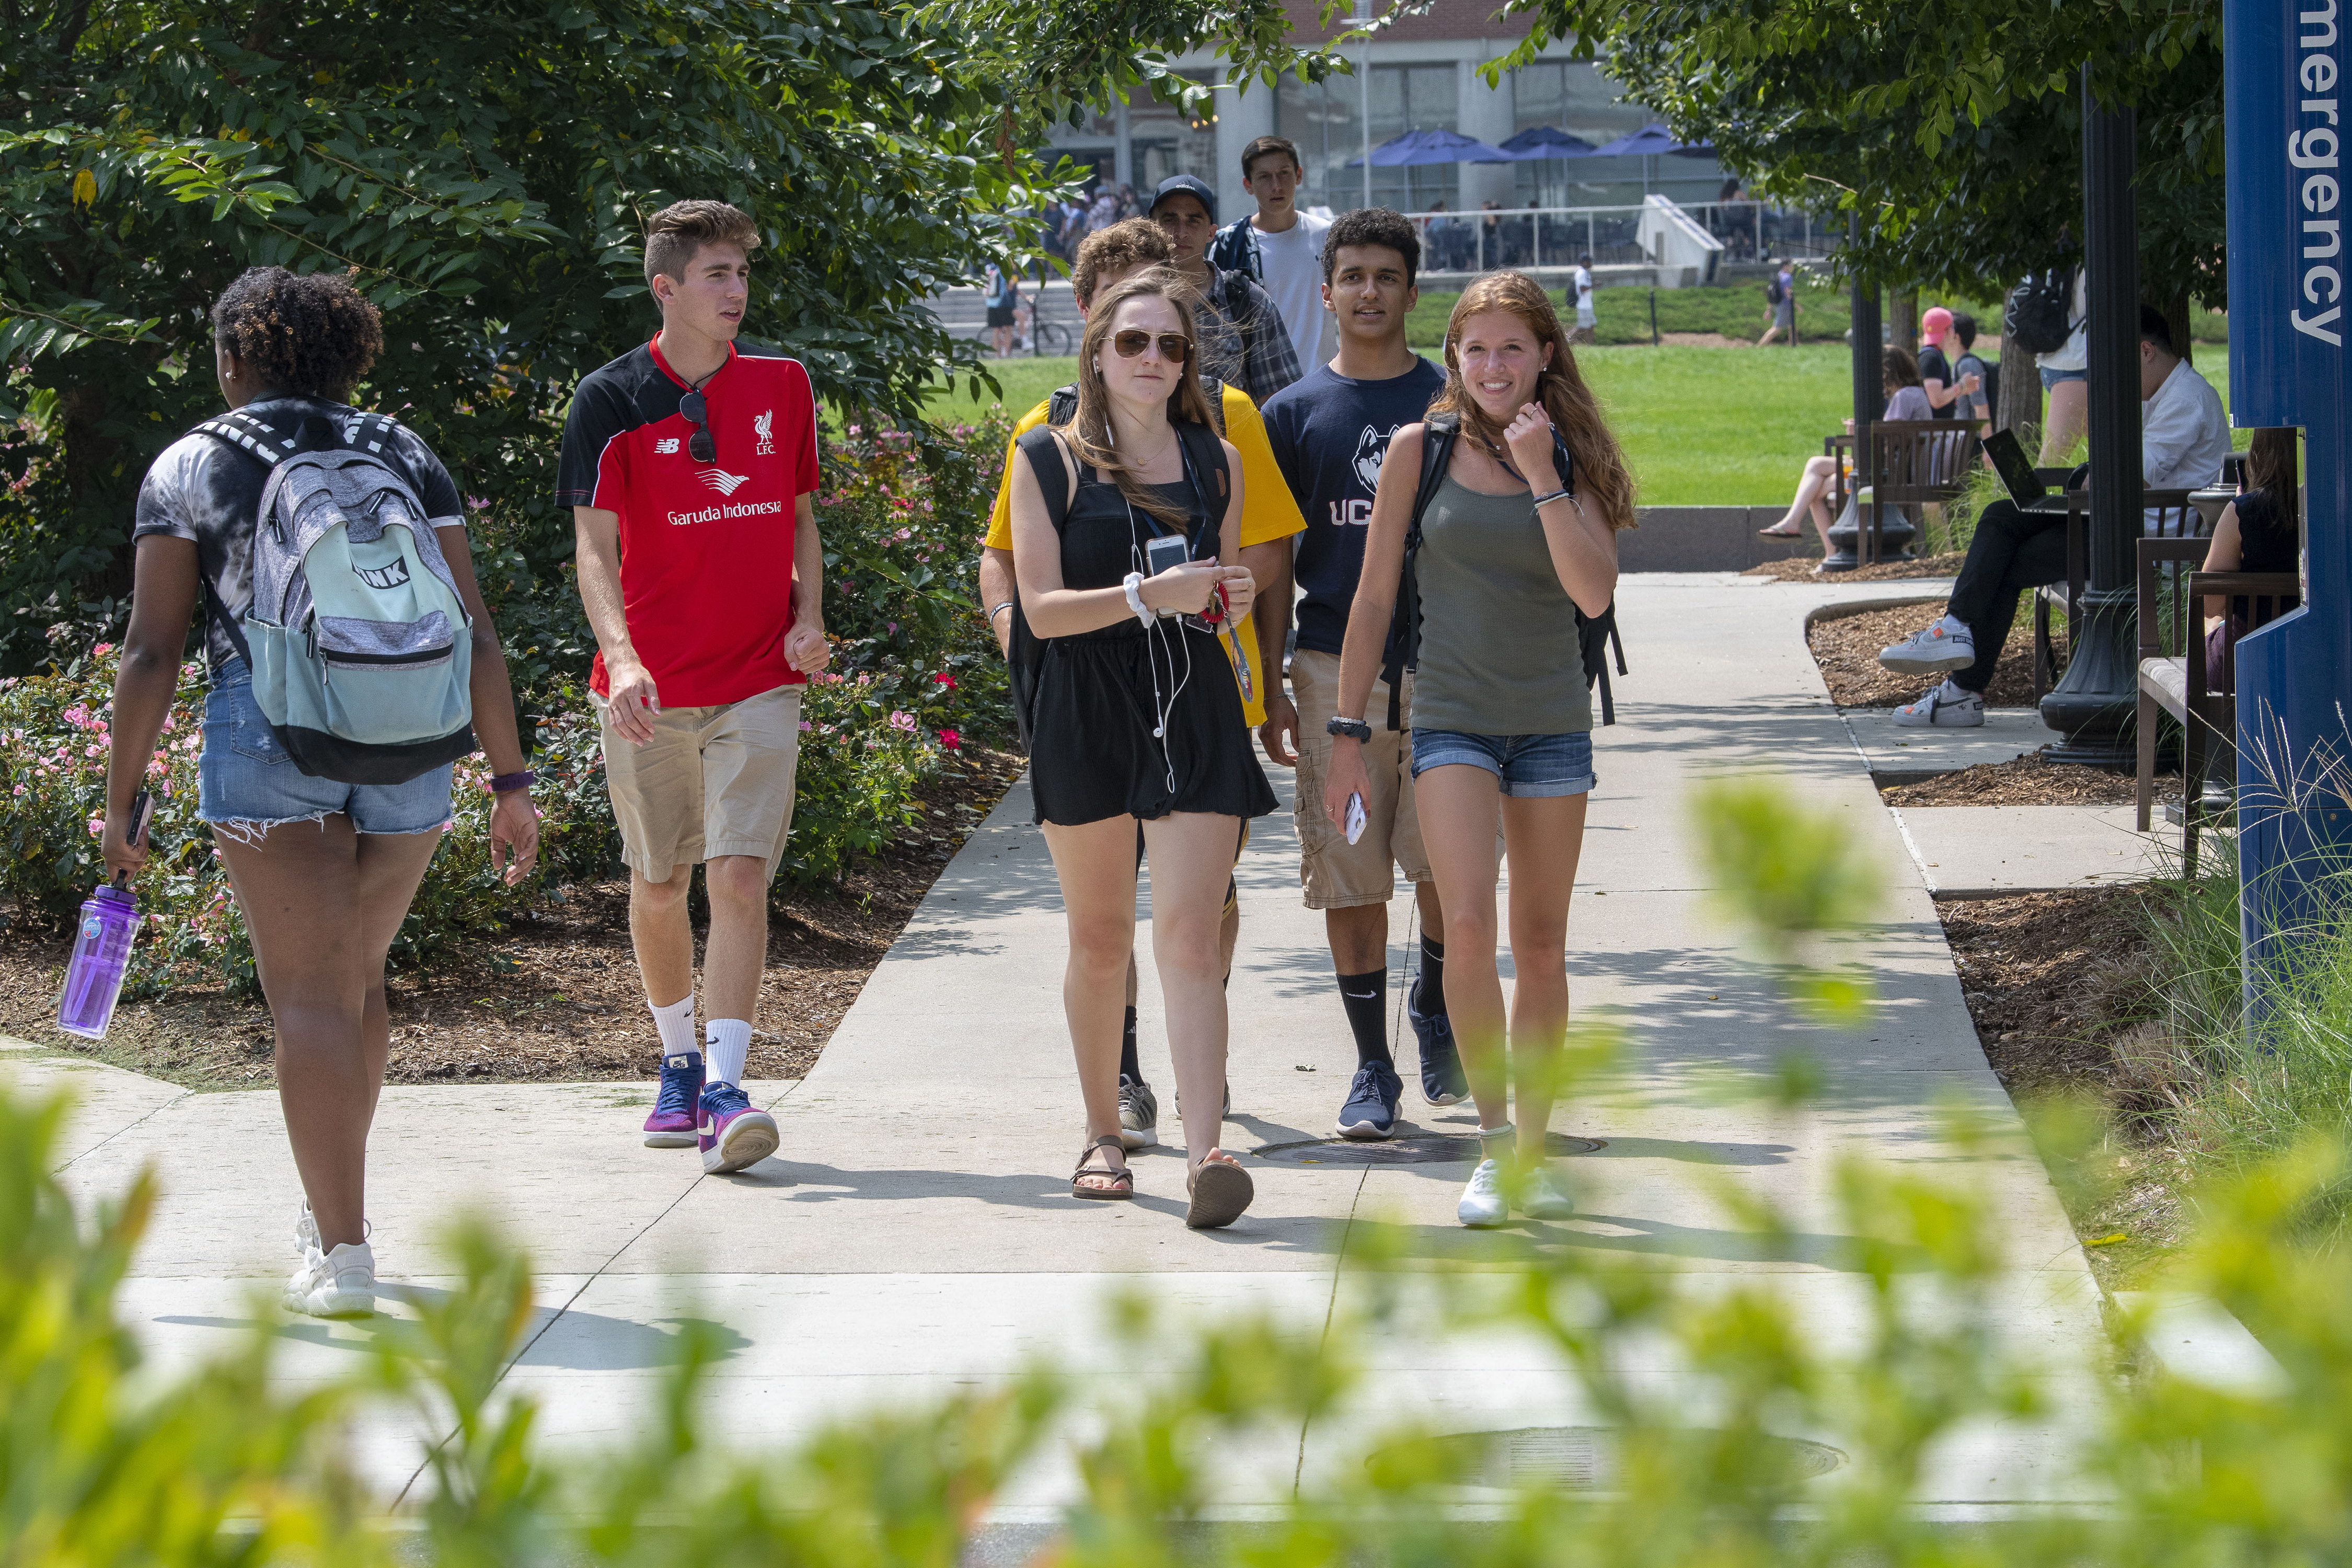 Students walking on campus on Aug. 27, 2018. (Sean Flynn/UConn Photo)